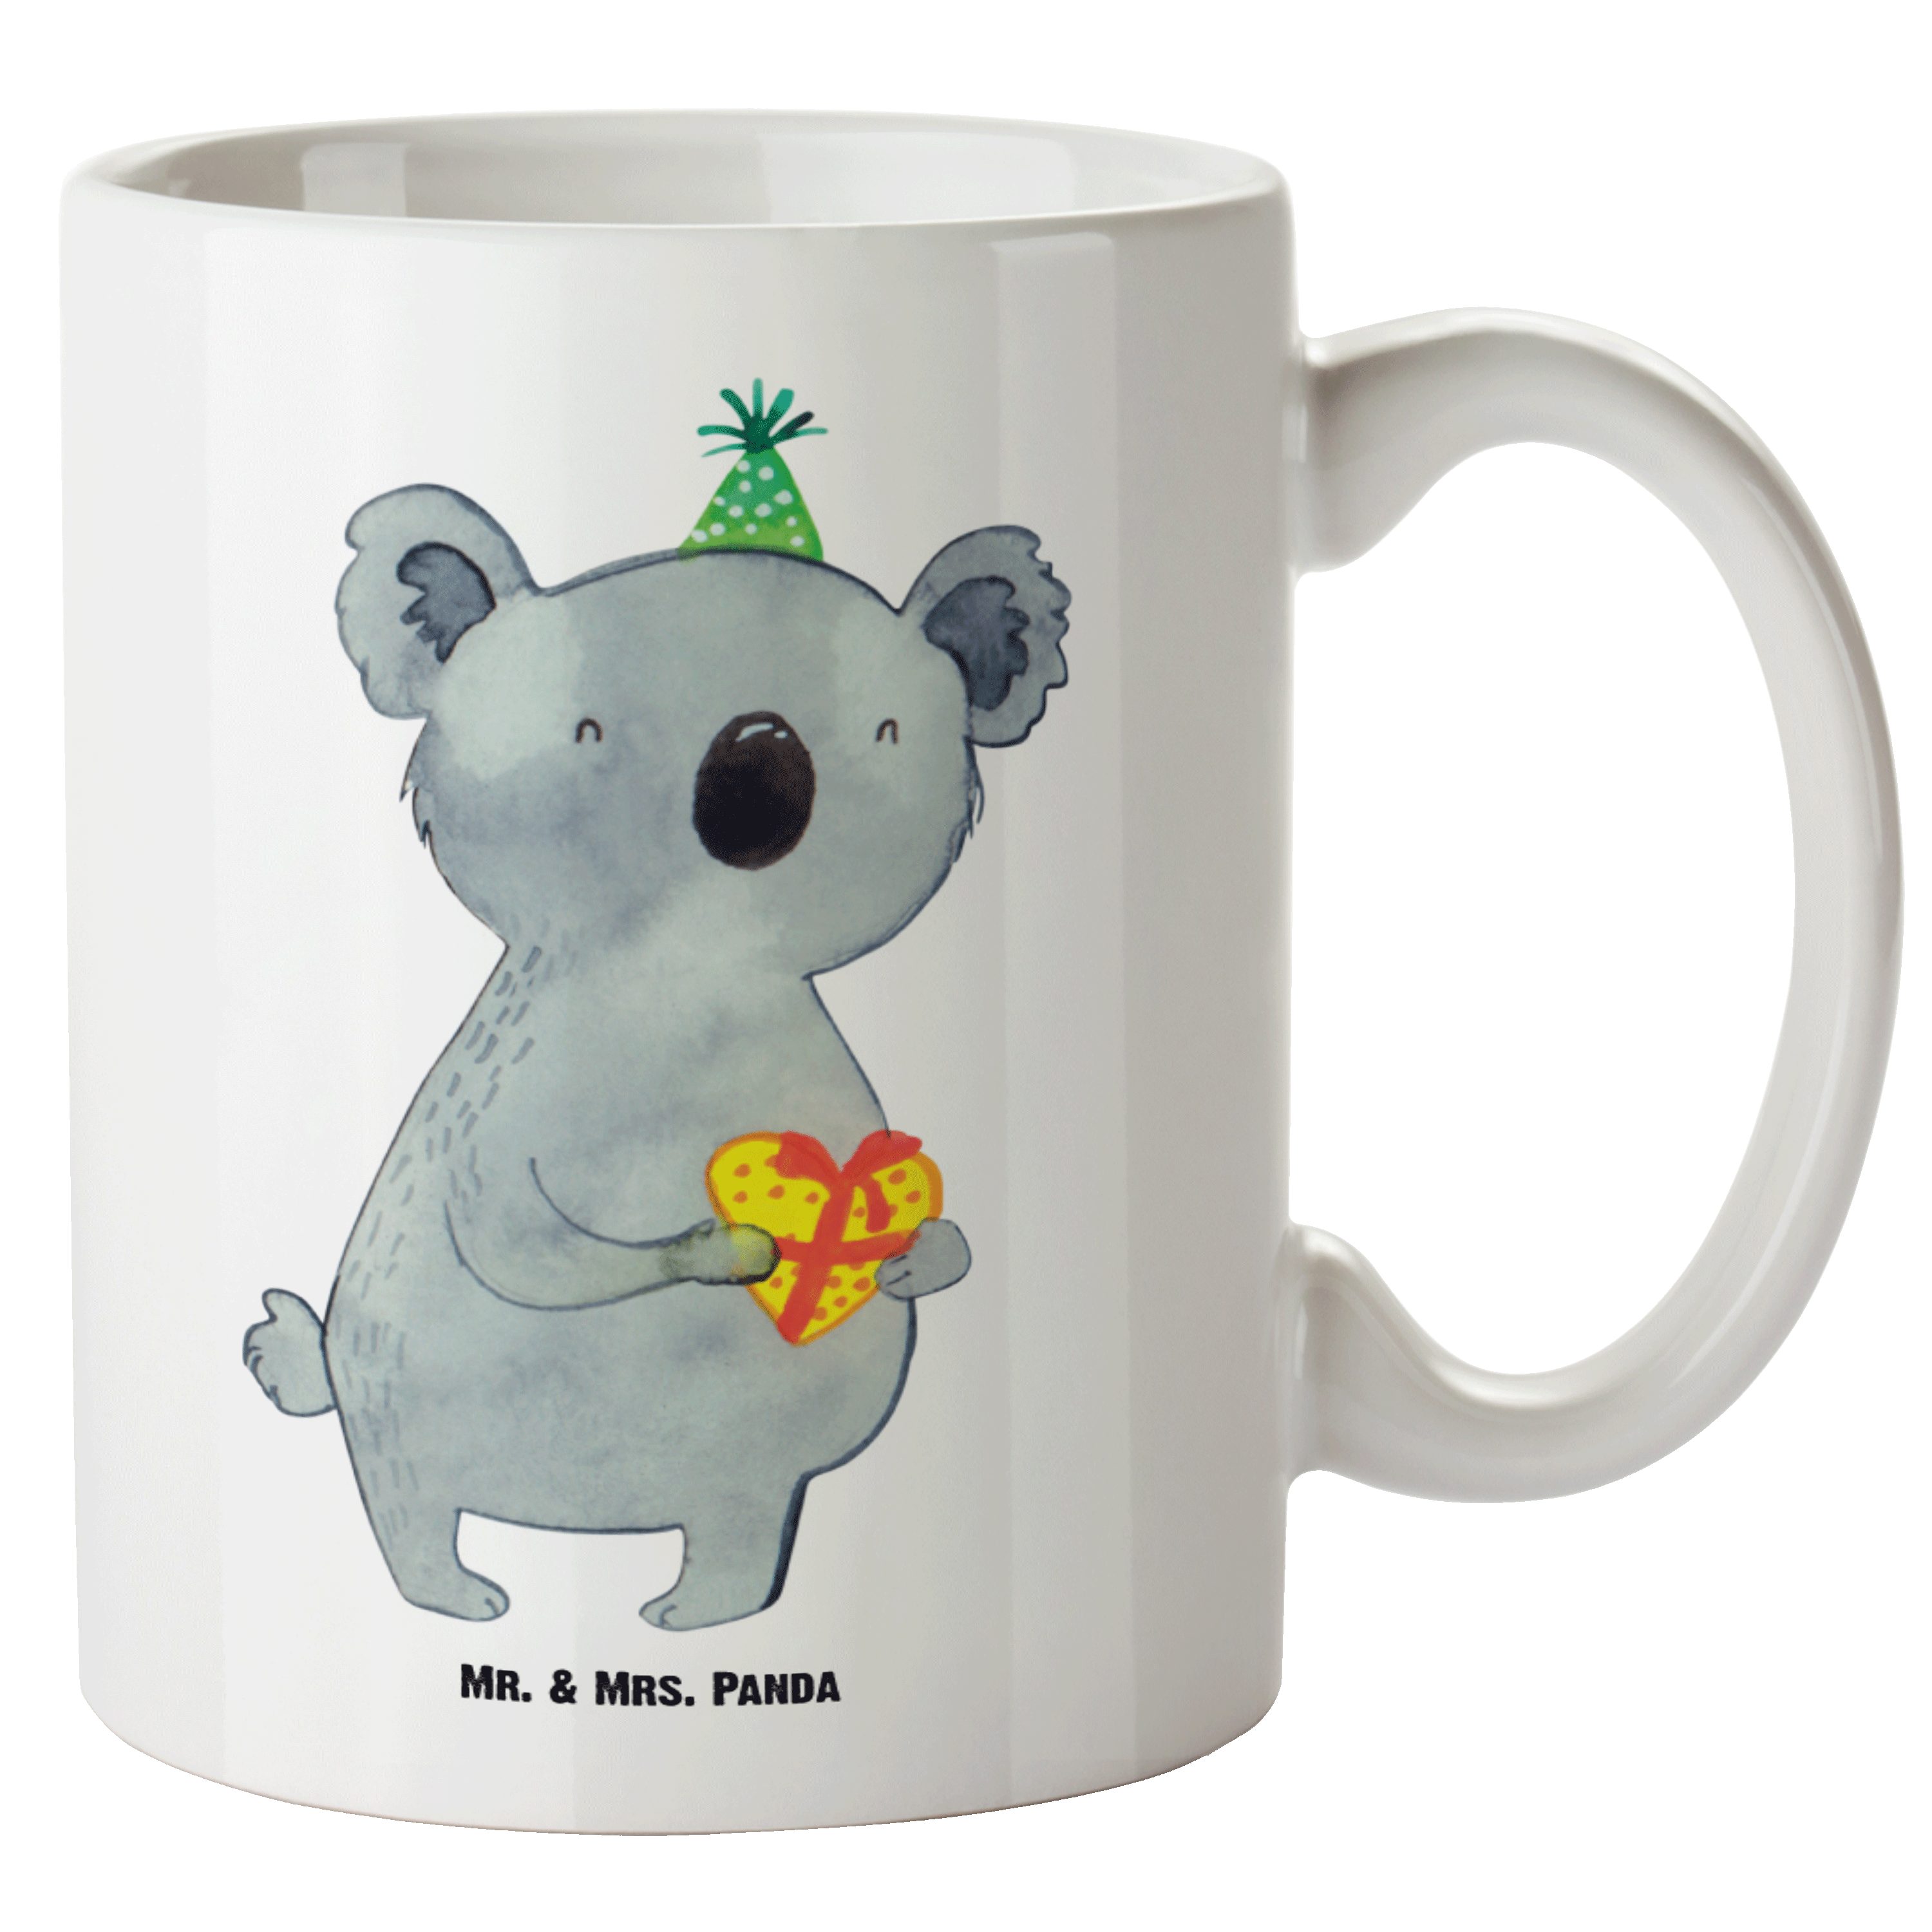 XL Koalabär, Große Keramik Tasse - XL, Party, & Mr. Tasse, Weiß Geschenk Panda Koala Mrs. Tasse - Geburtstag,